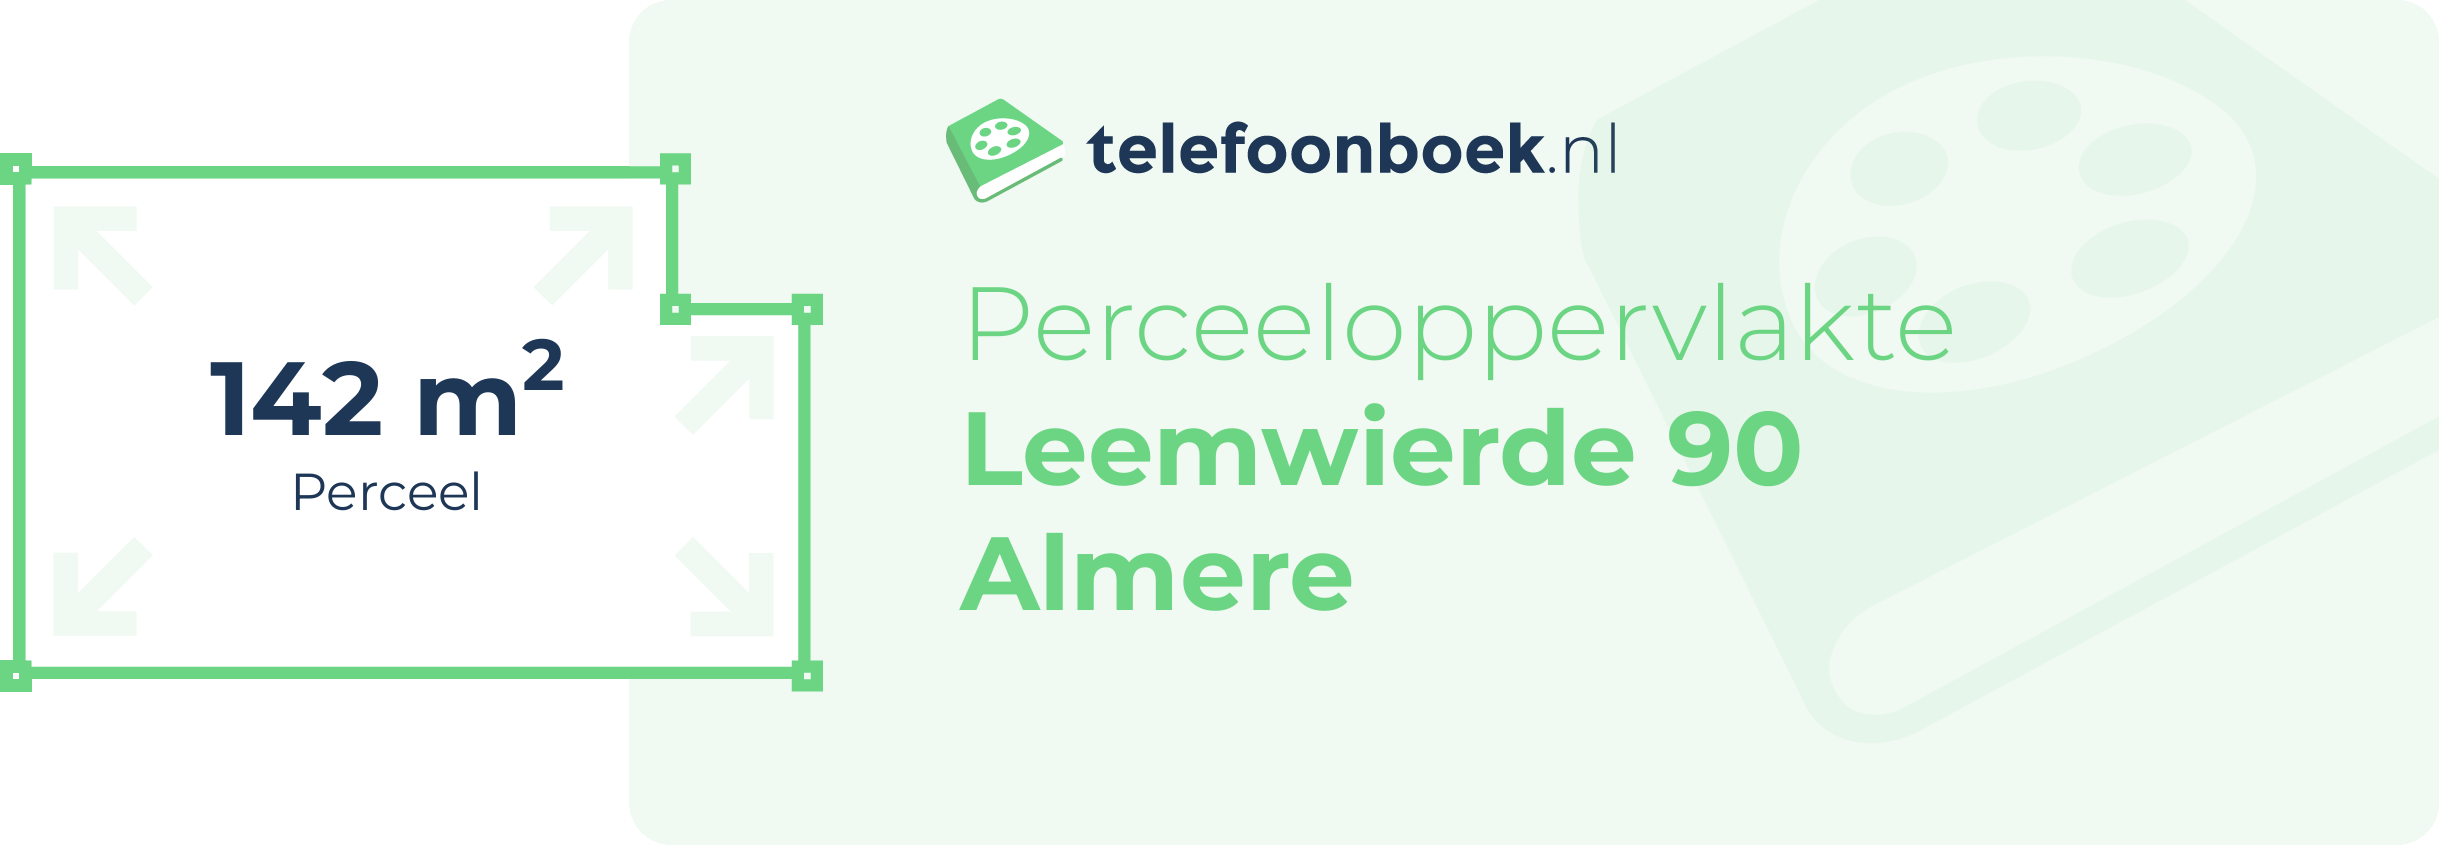 Perceeloppervlakte Leemwierde 90 Almere